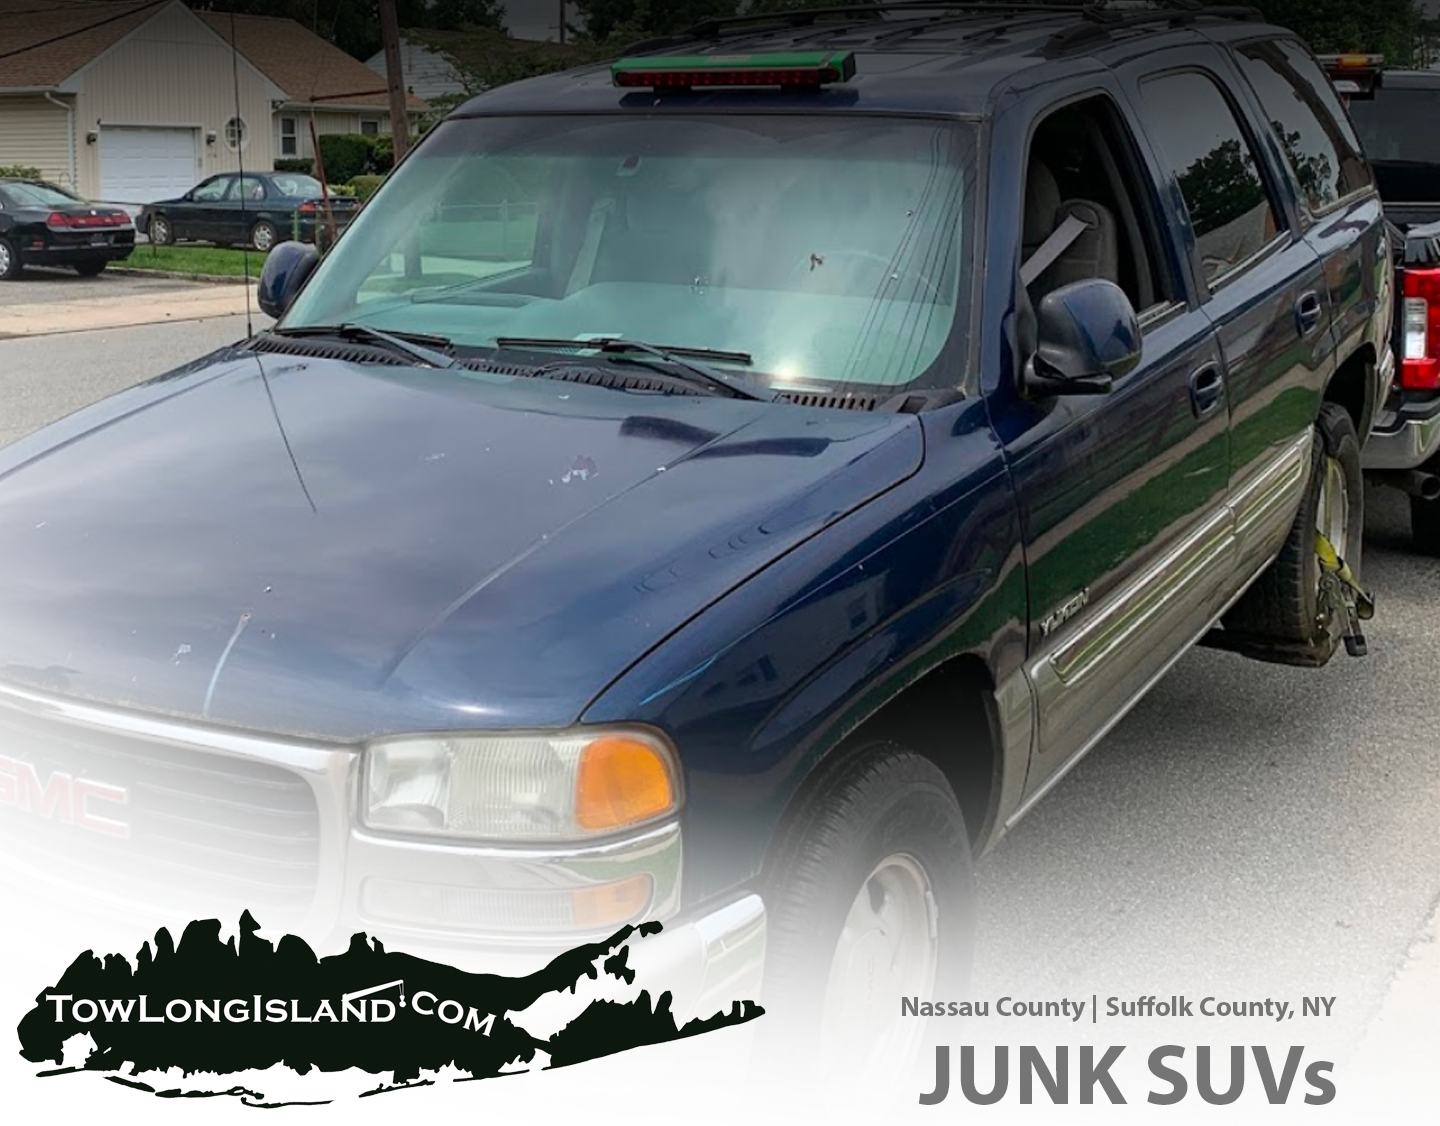 Junk SUVs Photo | TowLongIsland.com